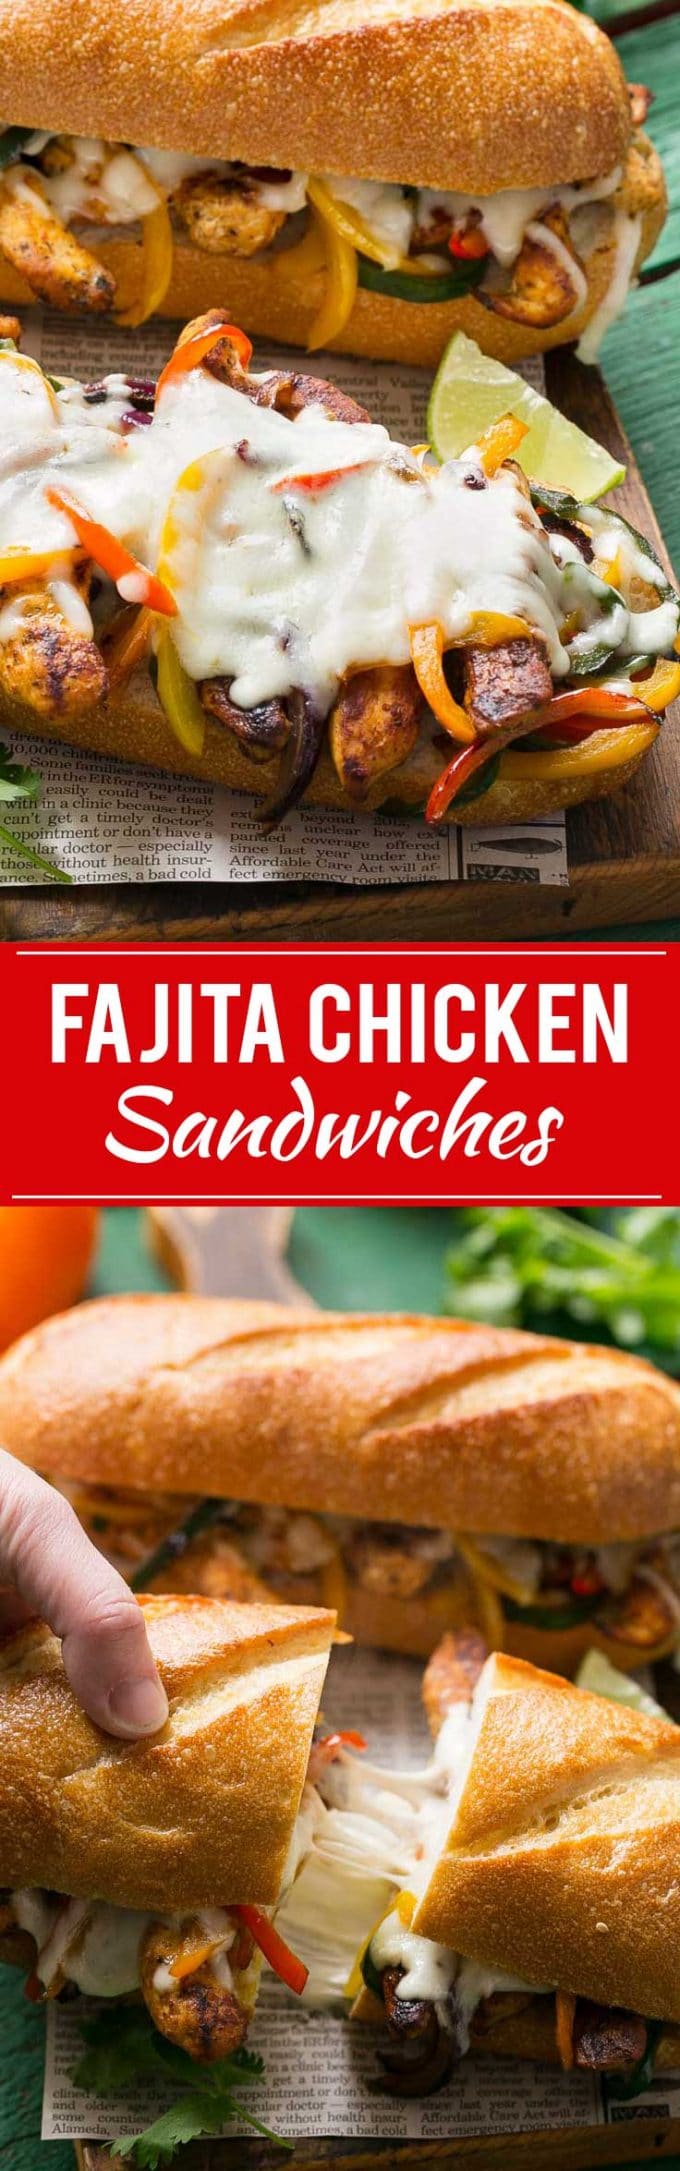 Fajita Chicken Cheesesteak Sandwich Recipe | Chicken Cheesesteak Sandwich | Fajita Chicken Sandwich | Best Fajita Chicken Sandwich | Best Chicken Cheesesteak Sandwich